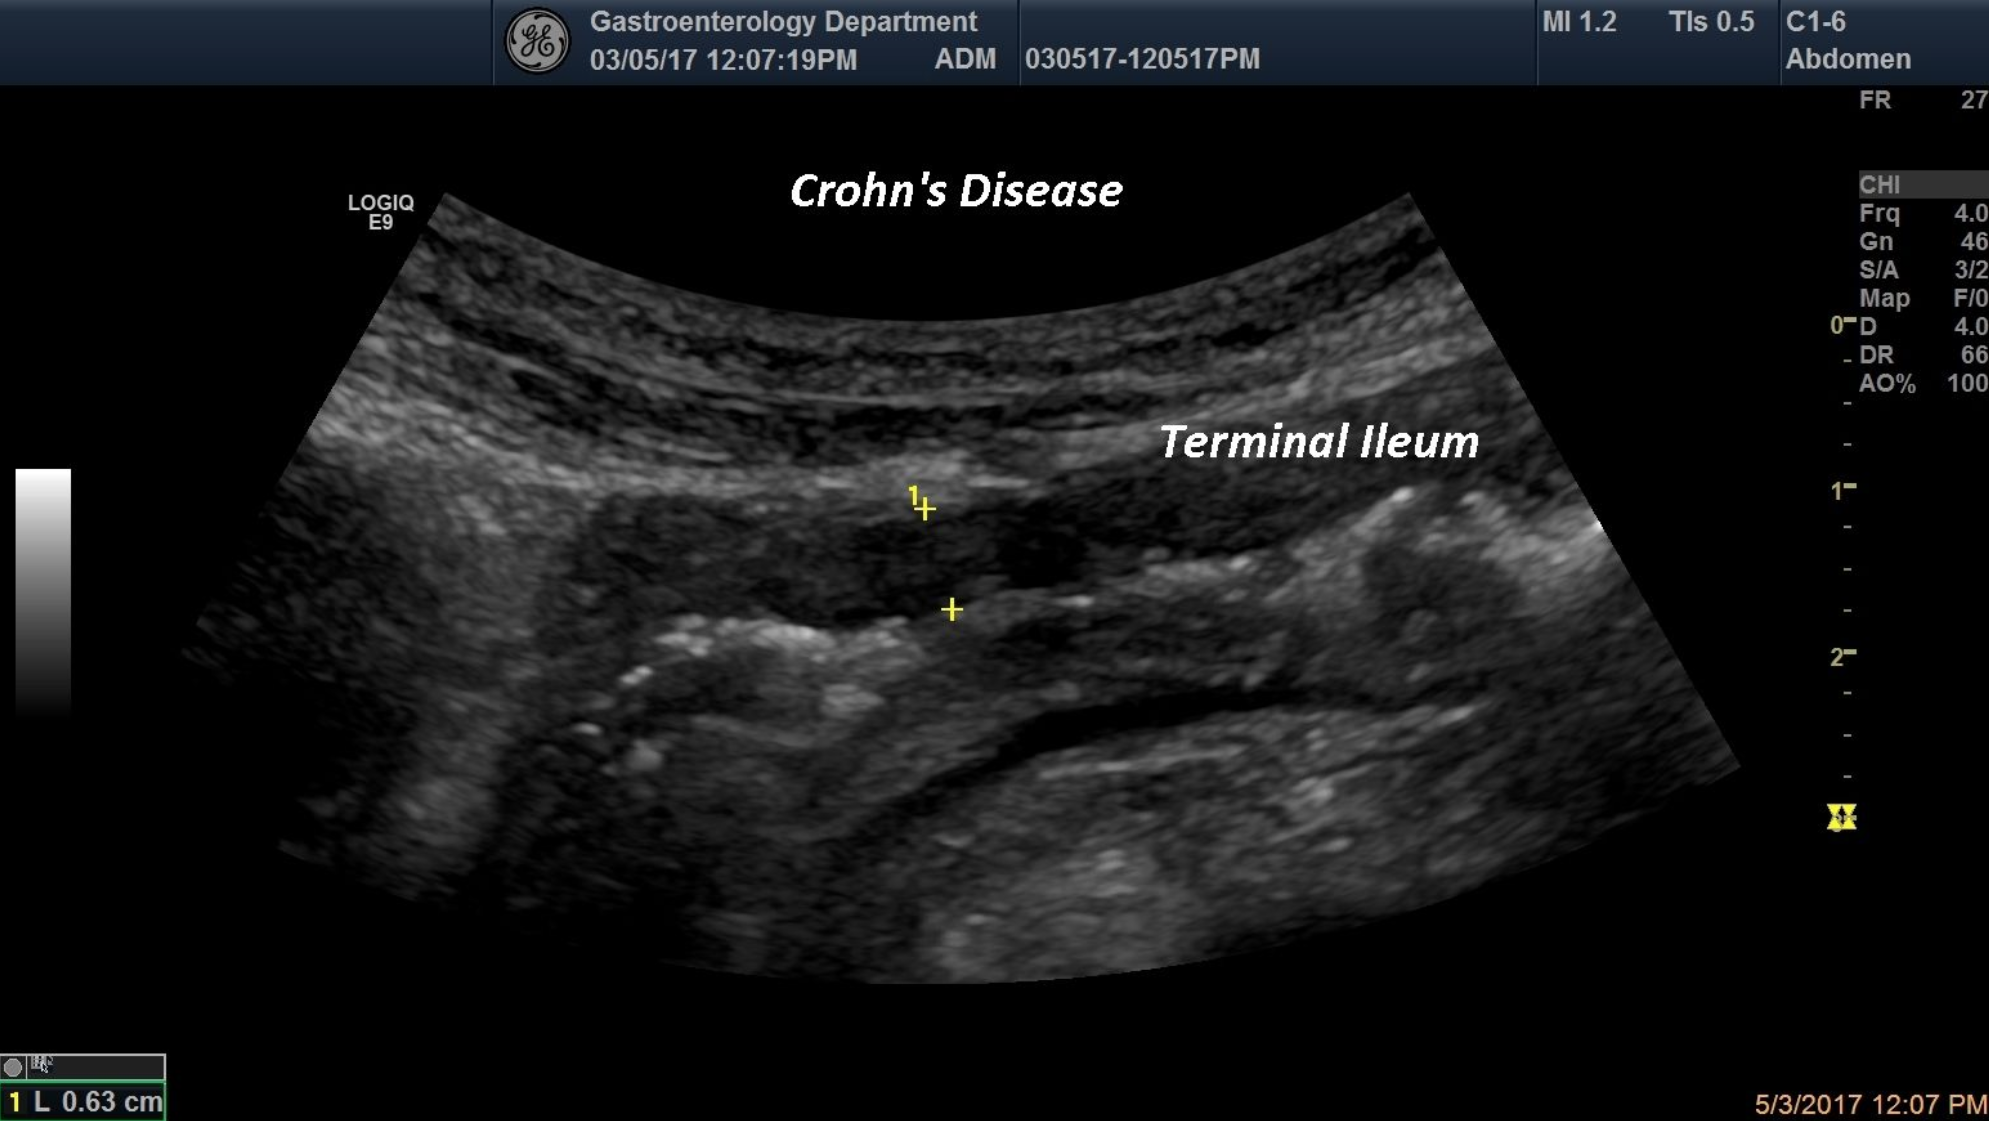 Crohn’s Disease [1 image]